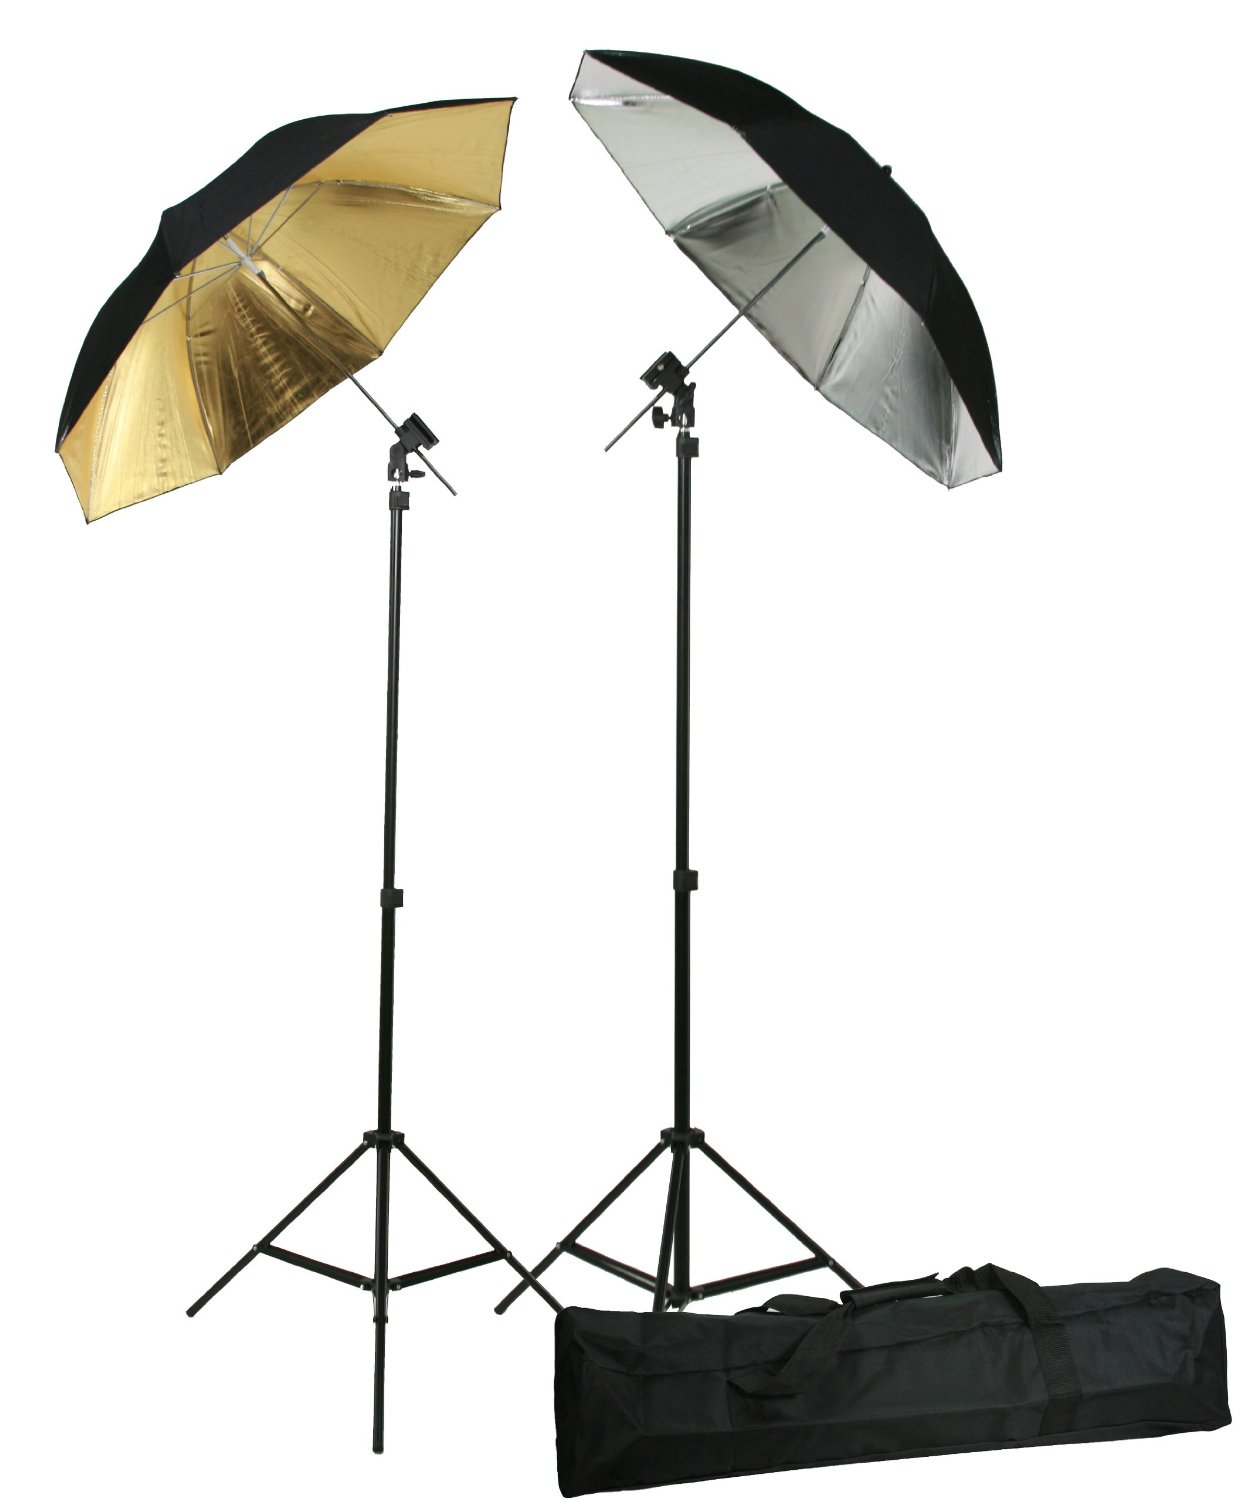 Double Off Camera Flash Photography Shoe Mount Swivel Bracket Umbrellas